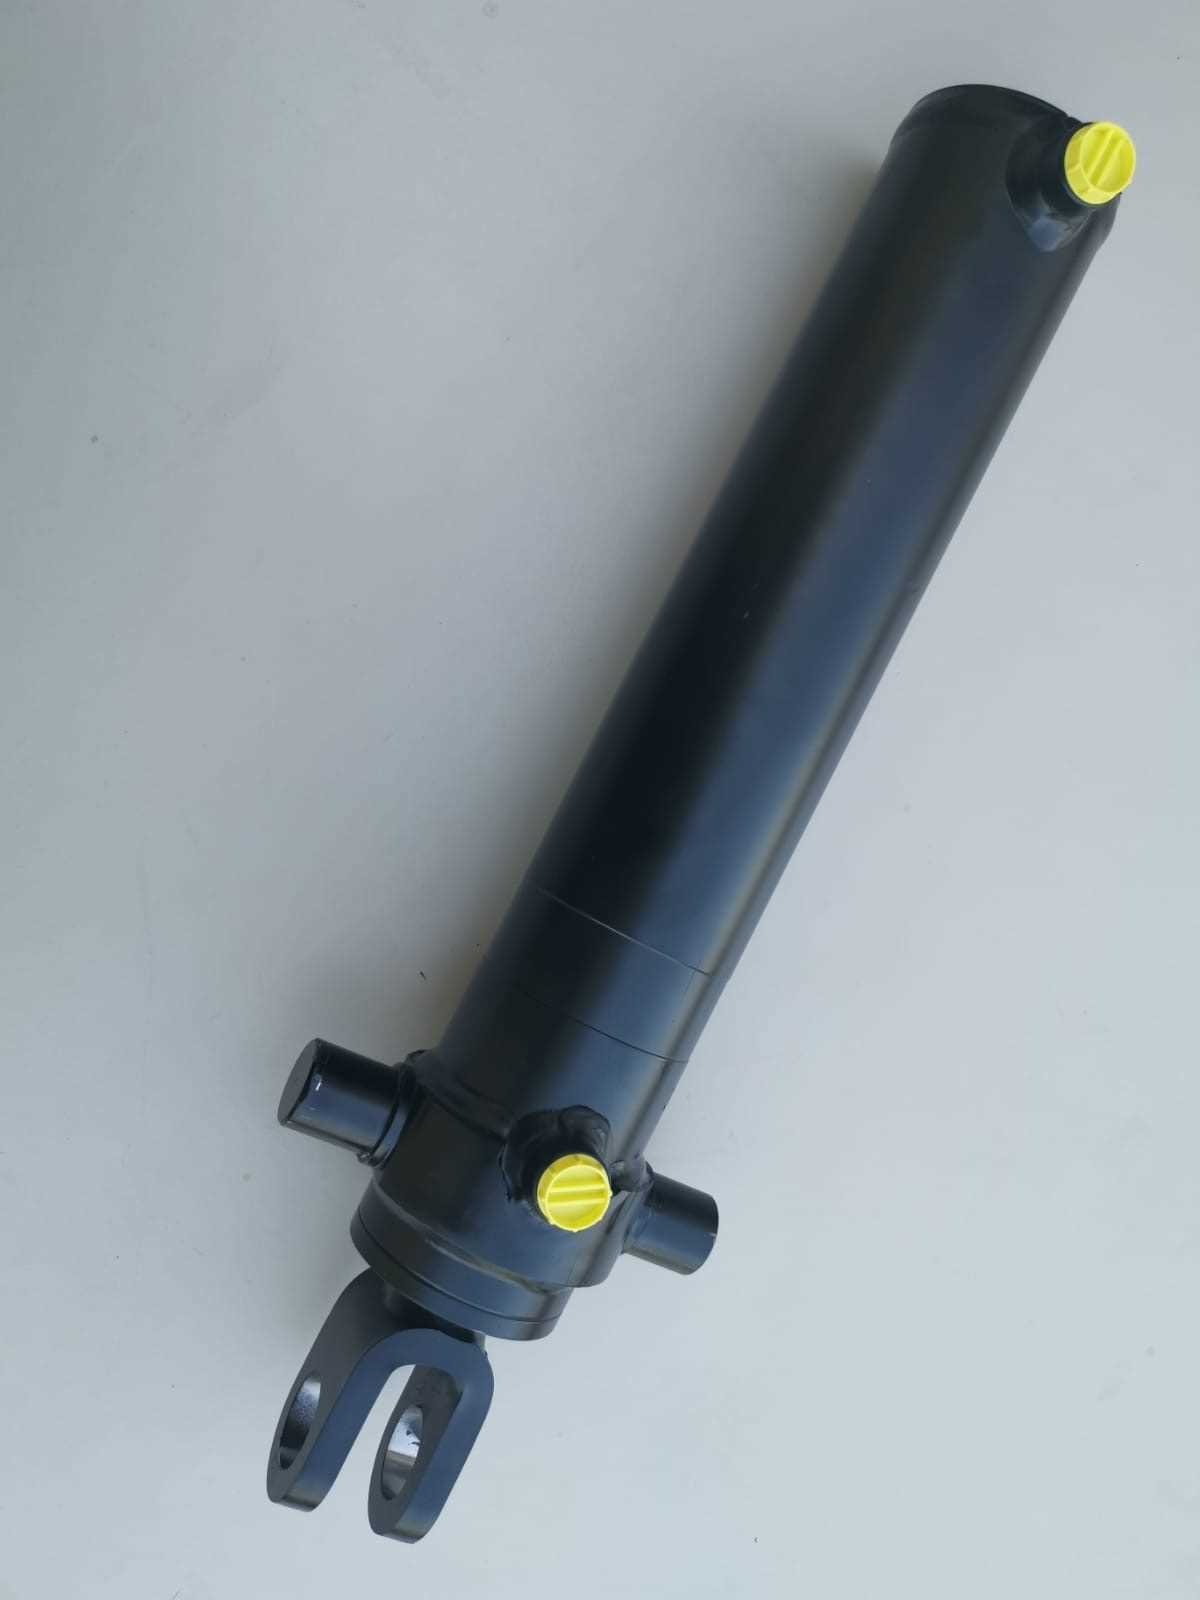 Hydraulikprofi24 - Hydraulikzylinder doppeltwirkend ohne